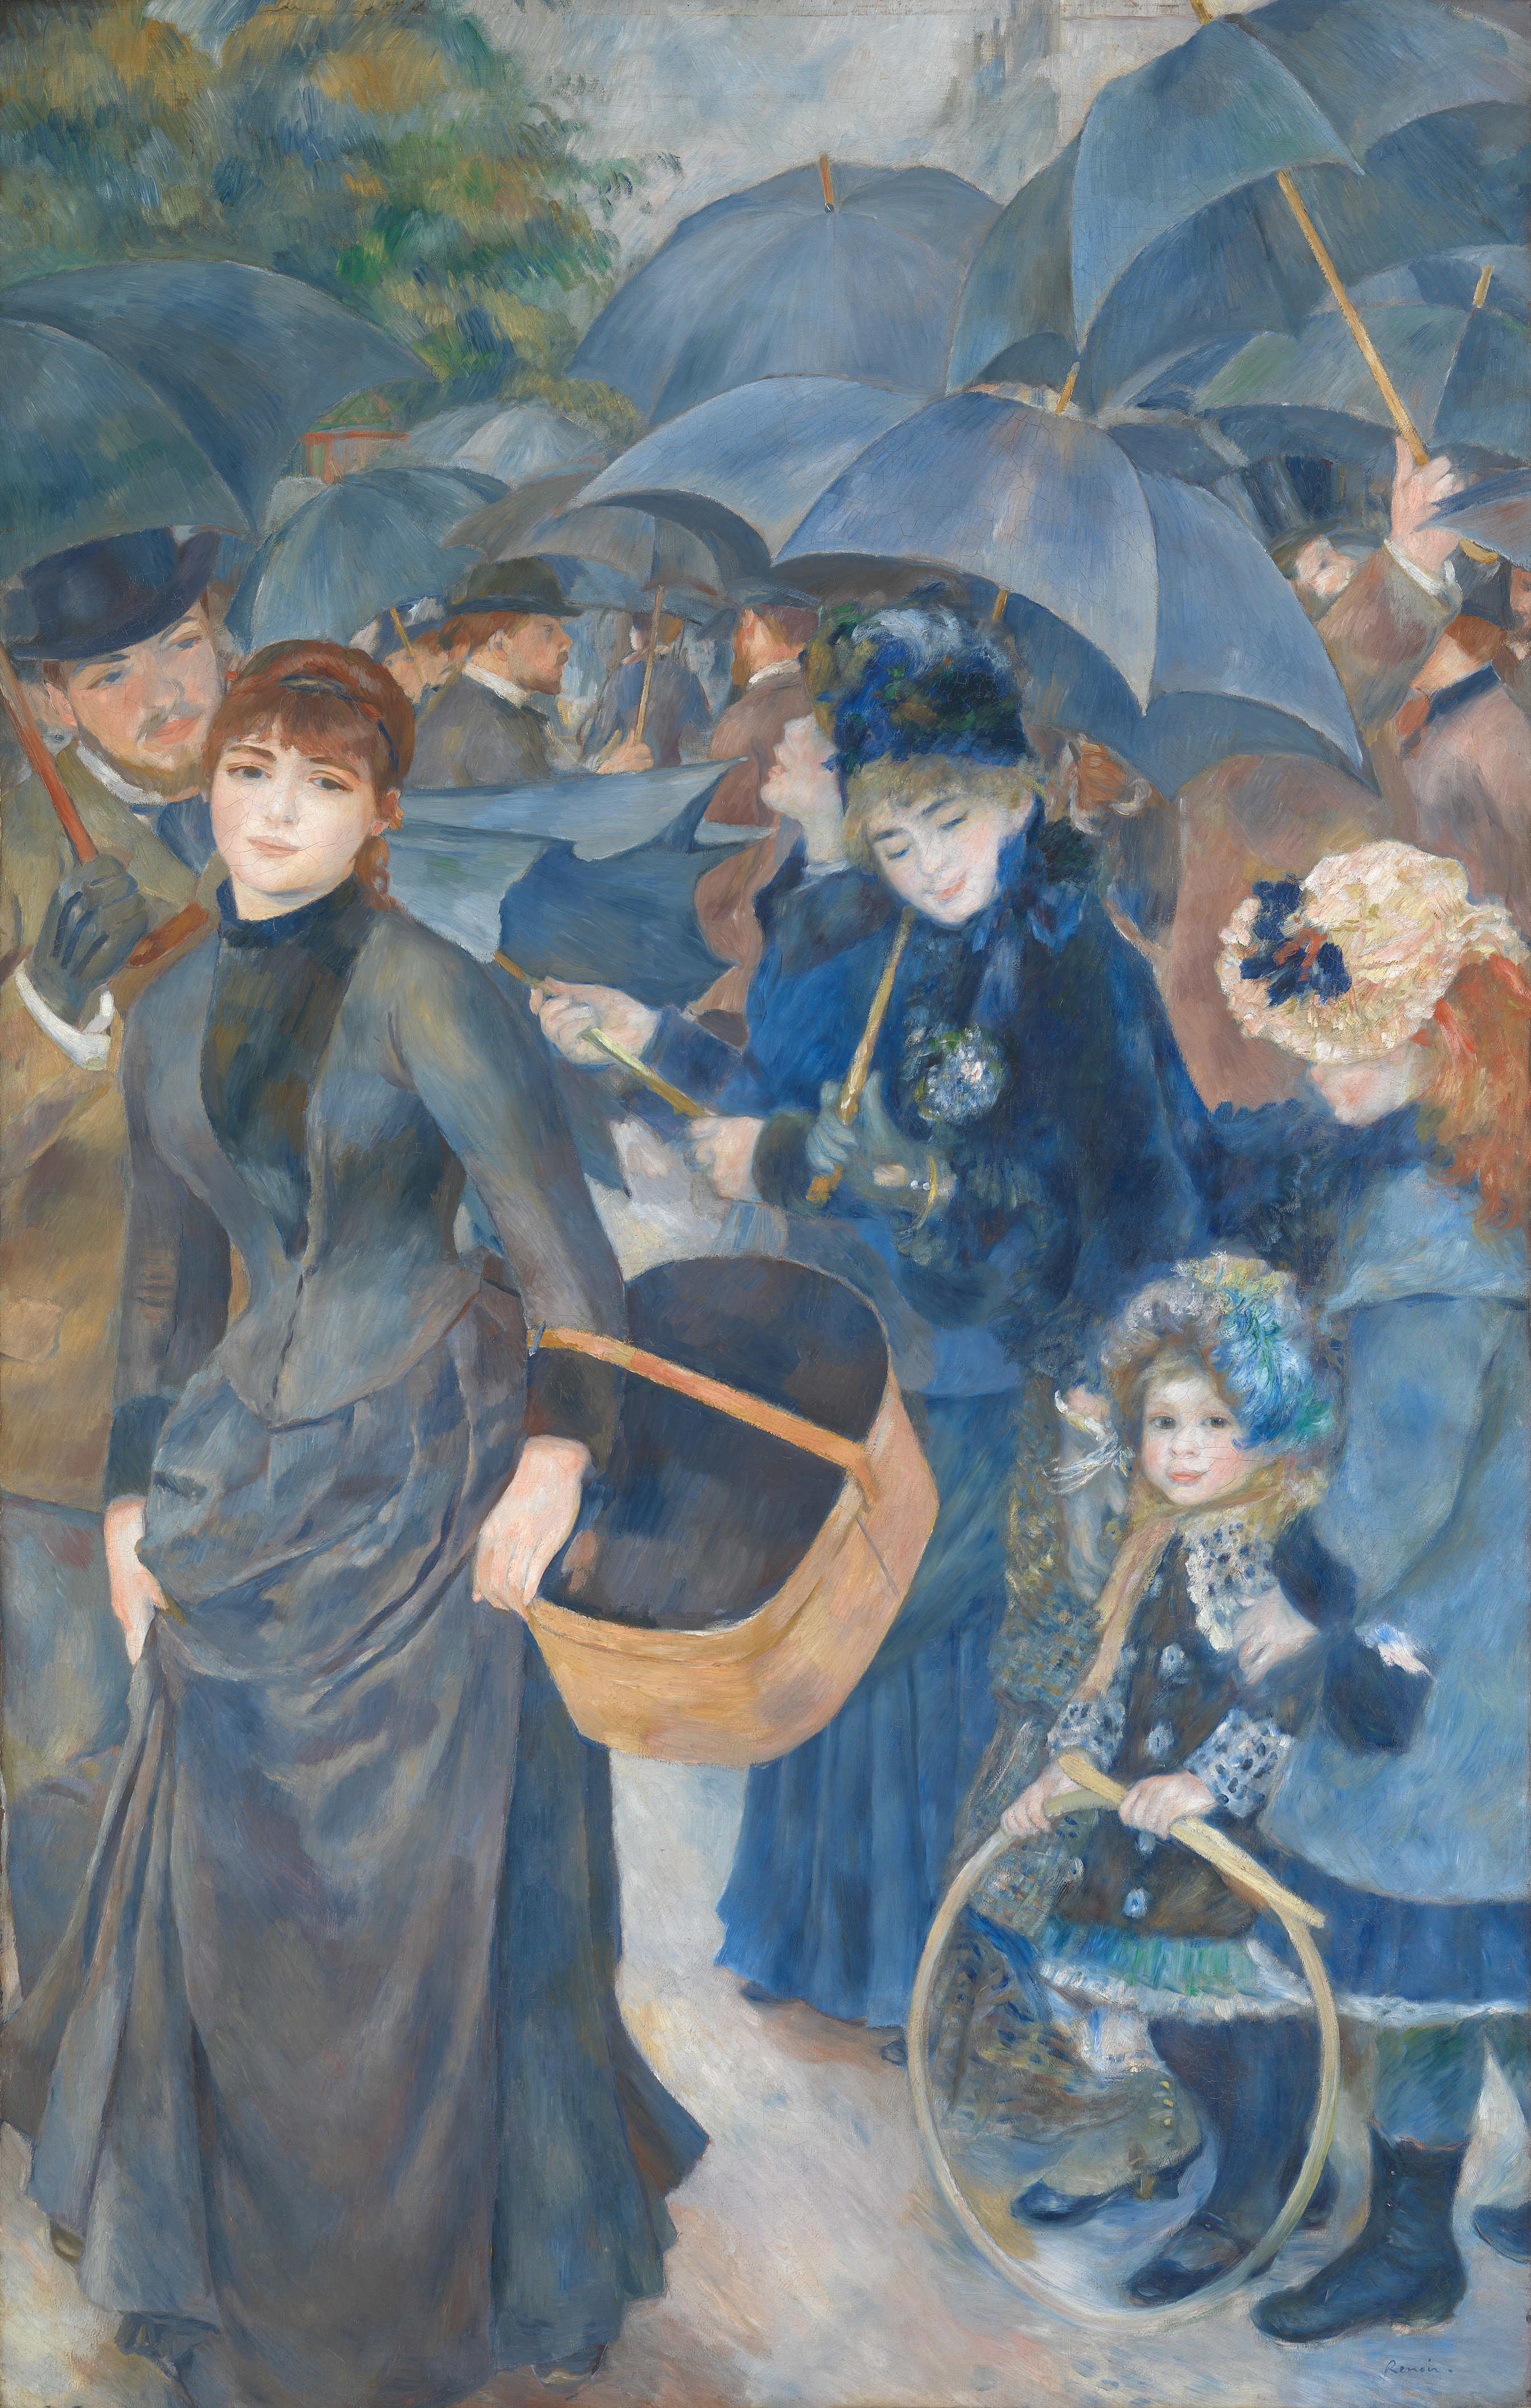 The Umbrellas by Pierre-Auguste Renoir - 1883 - 180 × 115 cm National Gallery